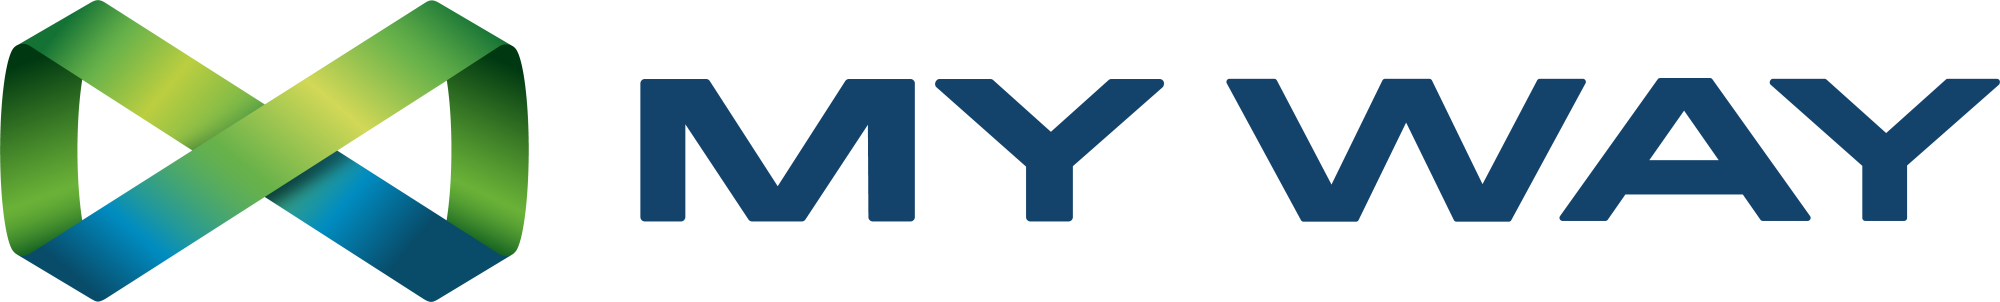 My Way logo